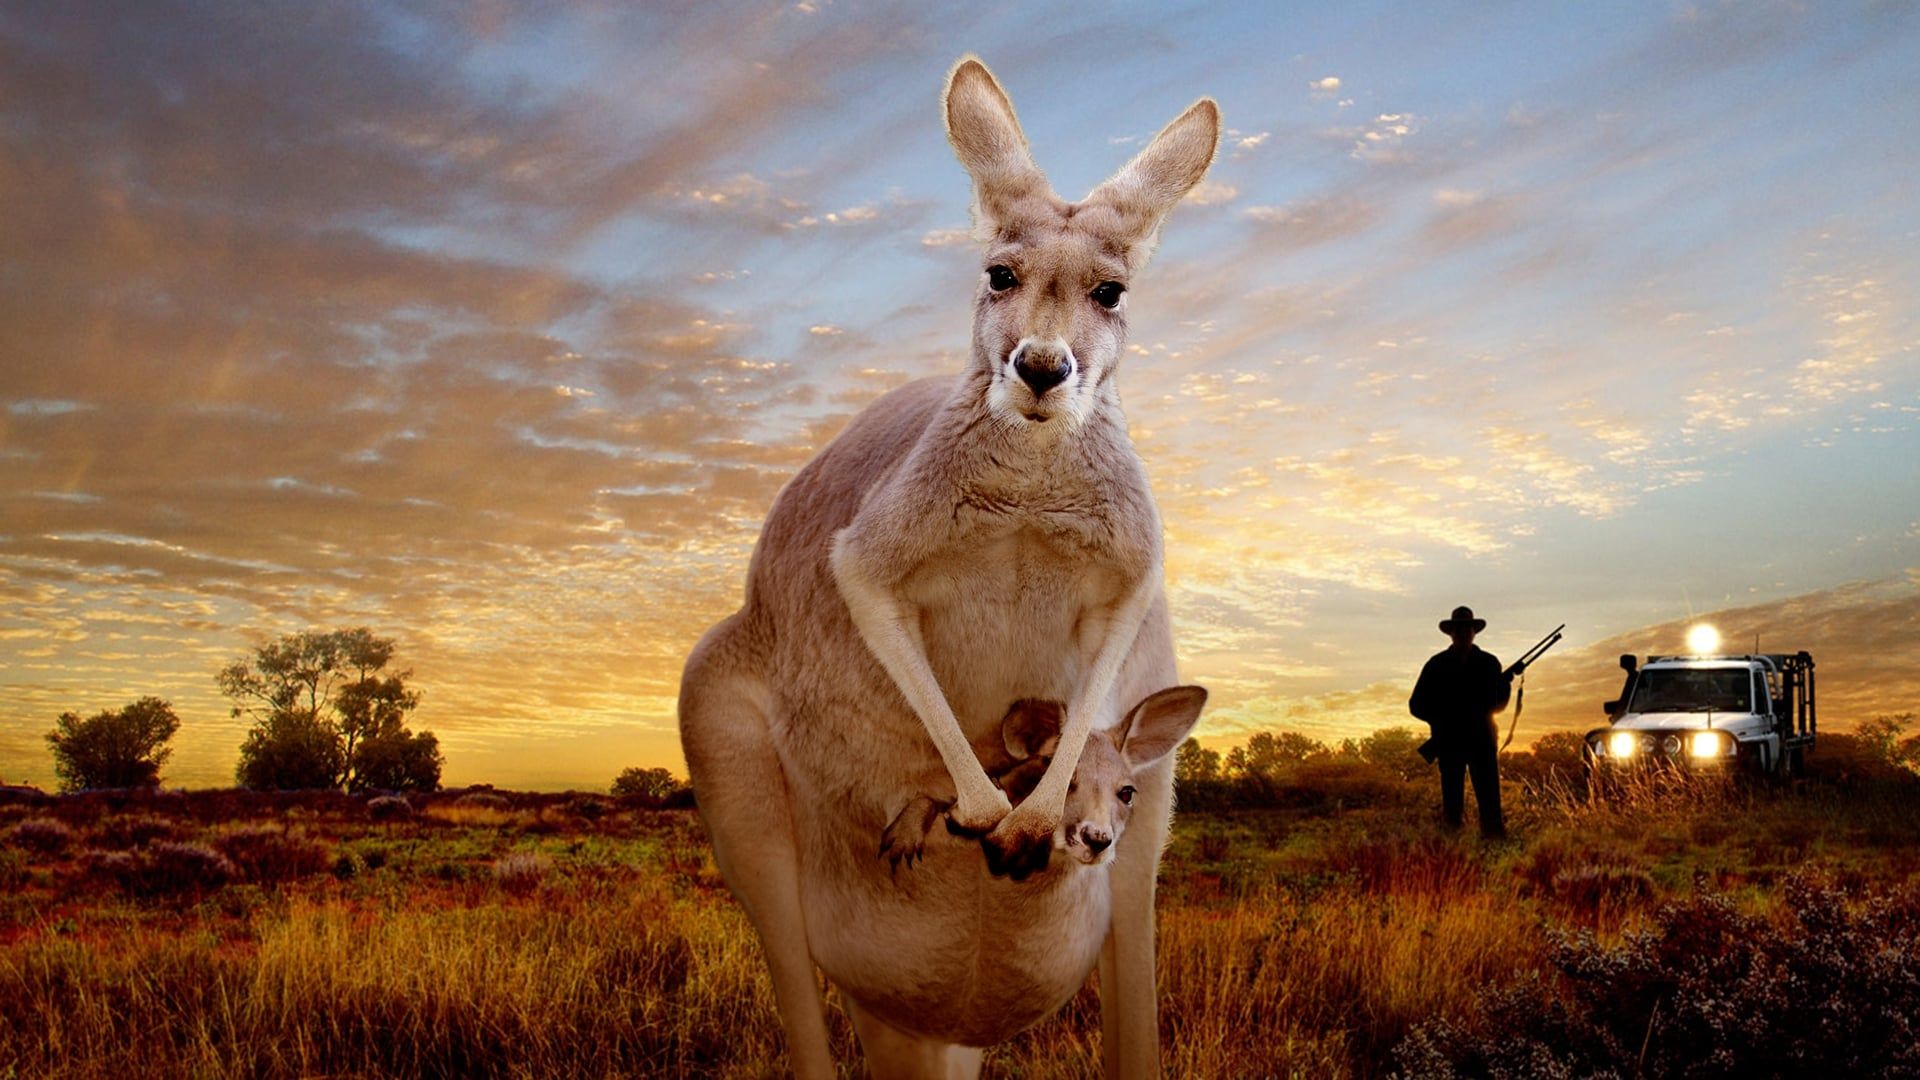 Kangaroo background